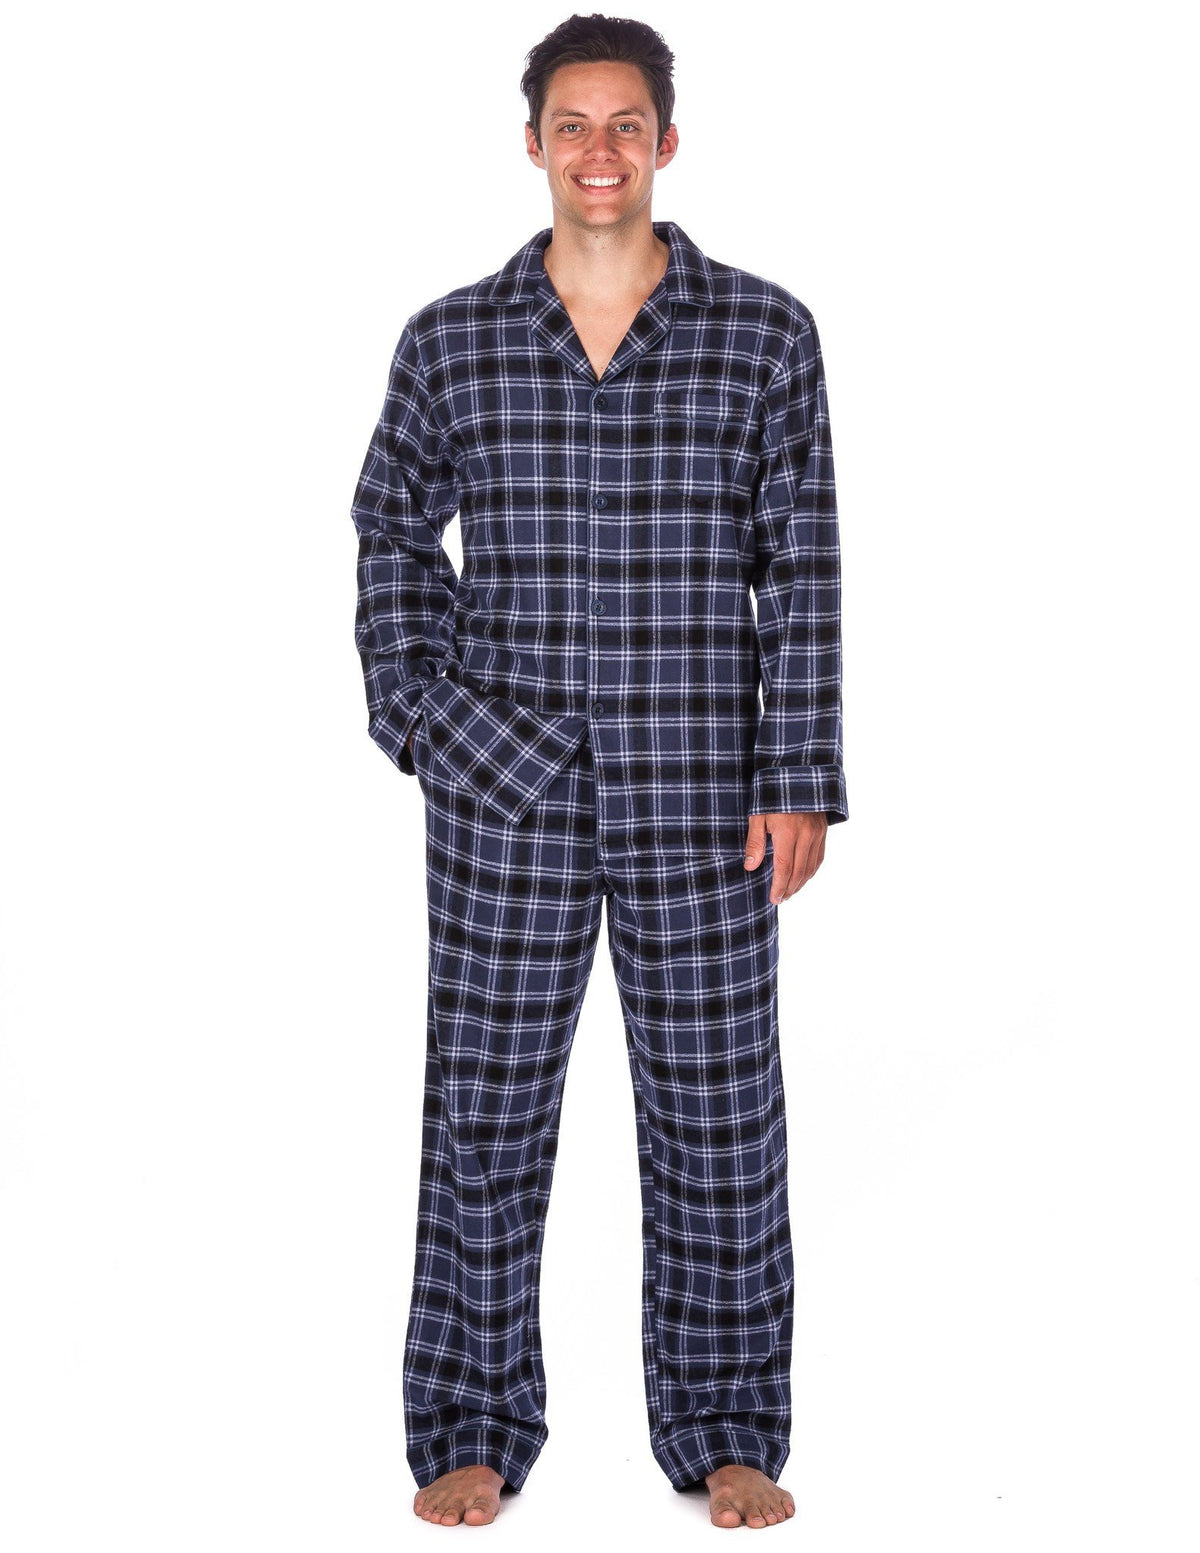 Men's Premium 100% Cotton Flannel Pajama Sleepwear Set (Relaxed Fit) - Blue/Black Plaid